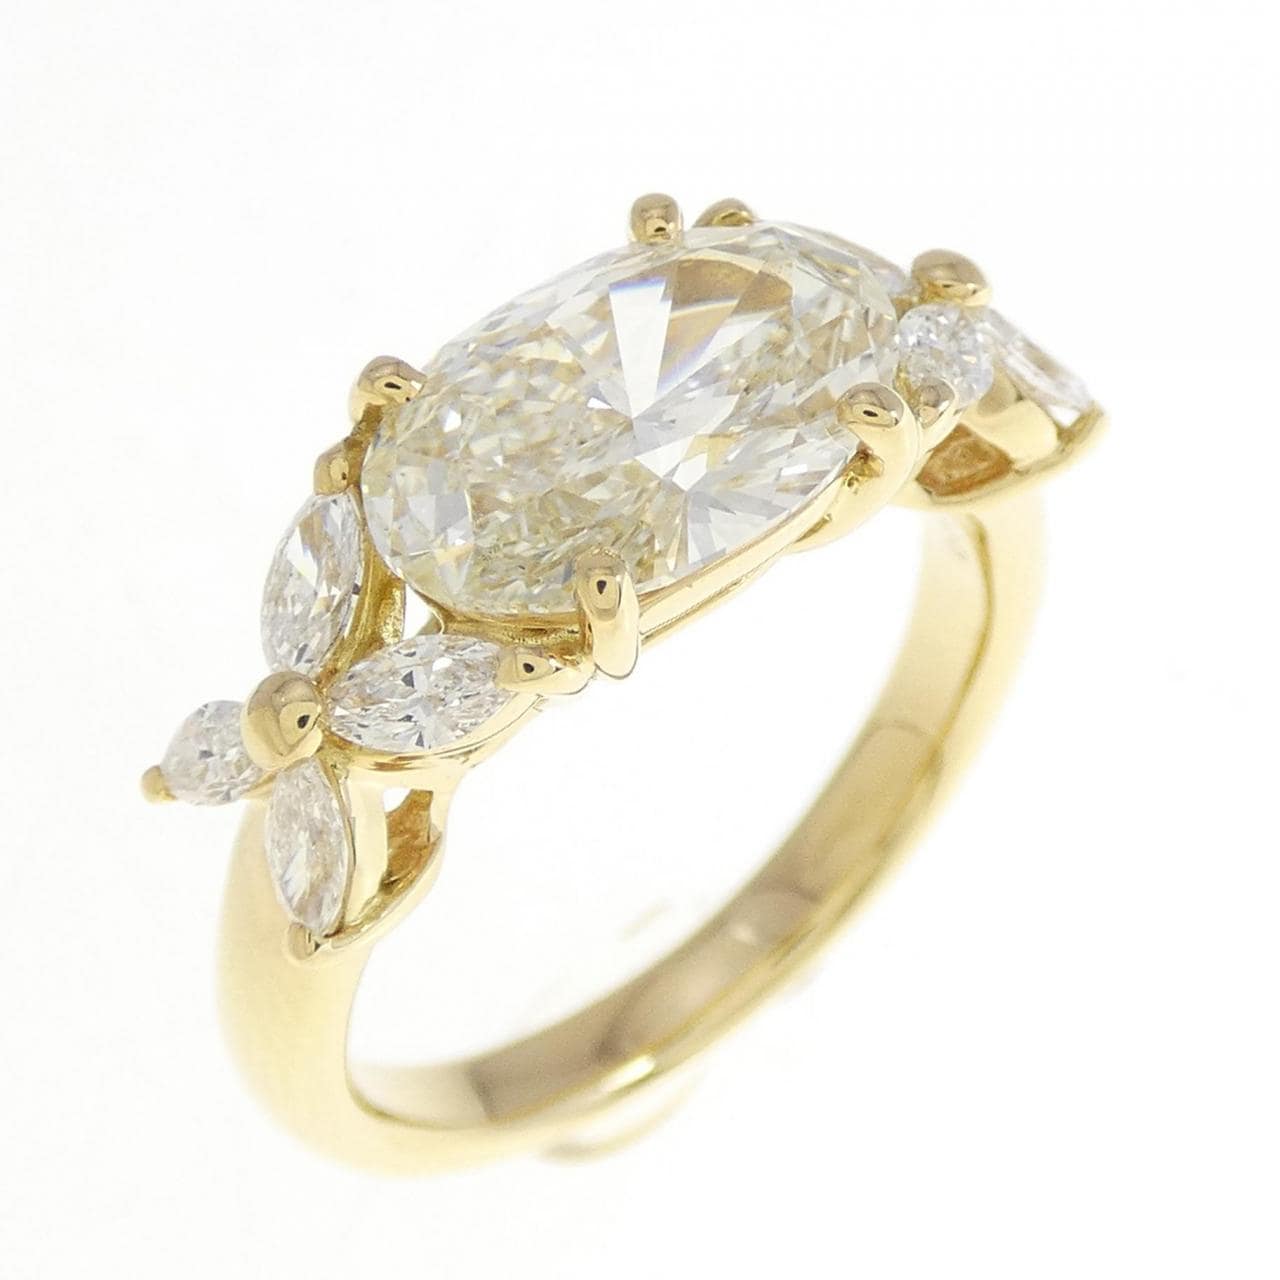 [Remake] K18YG Diamond ring 2.015CT L VS2 oval cut